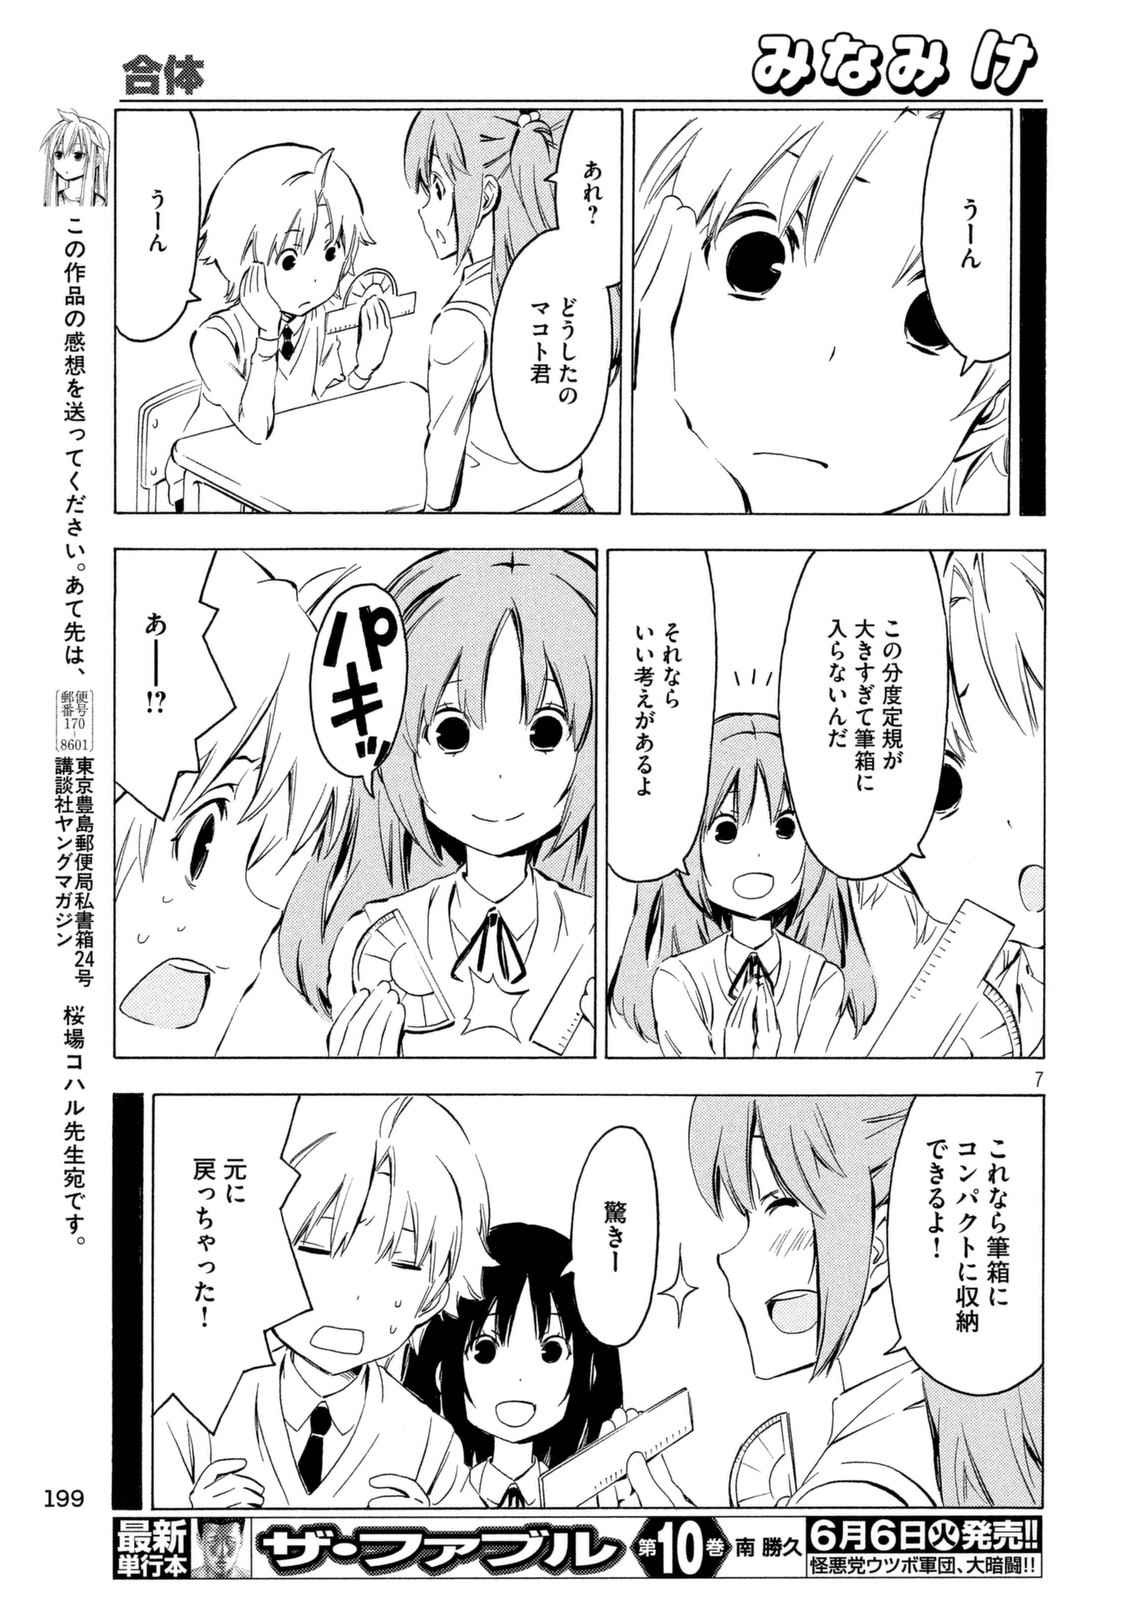 Minami-ke - Chapter 318 - Page 7